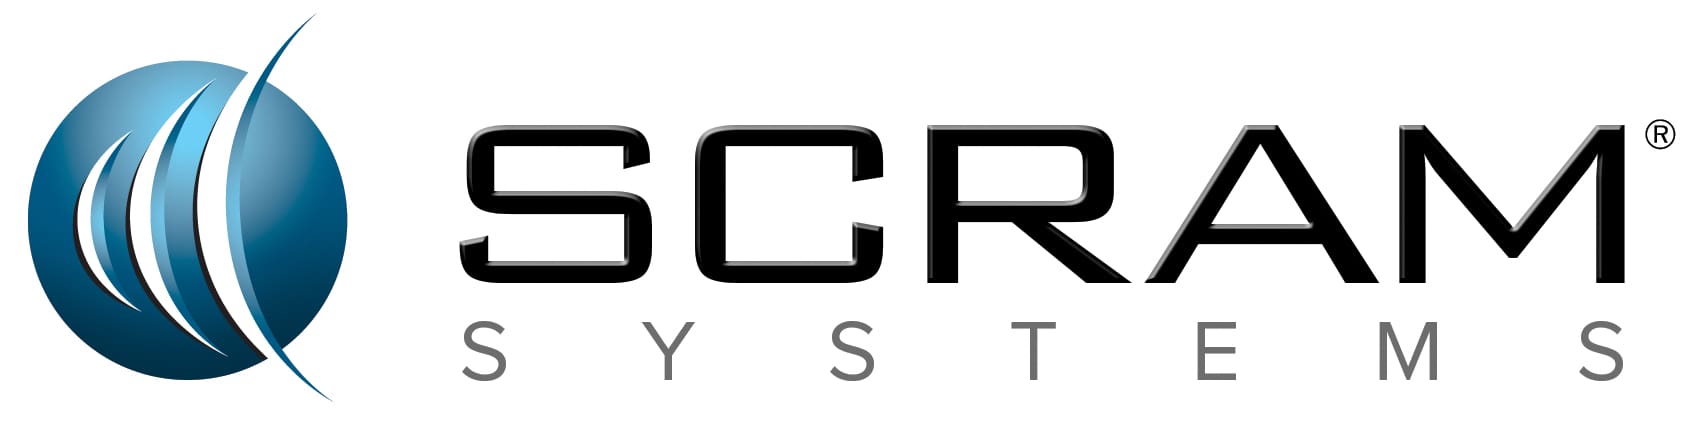 A logo of the company scripps.